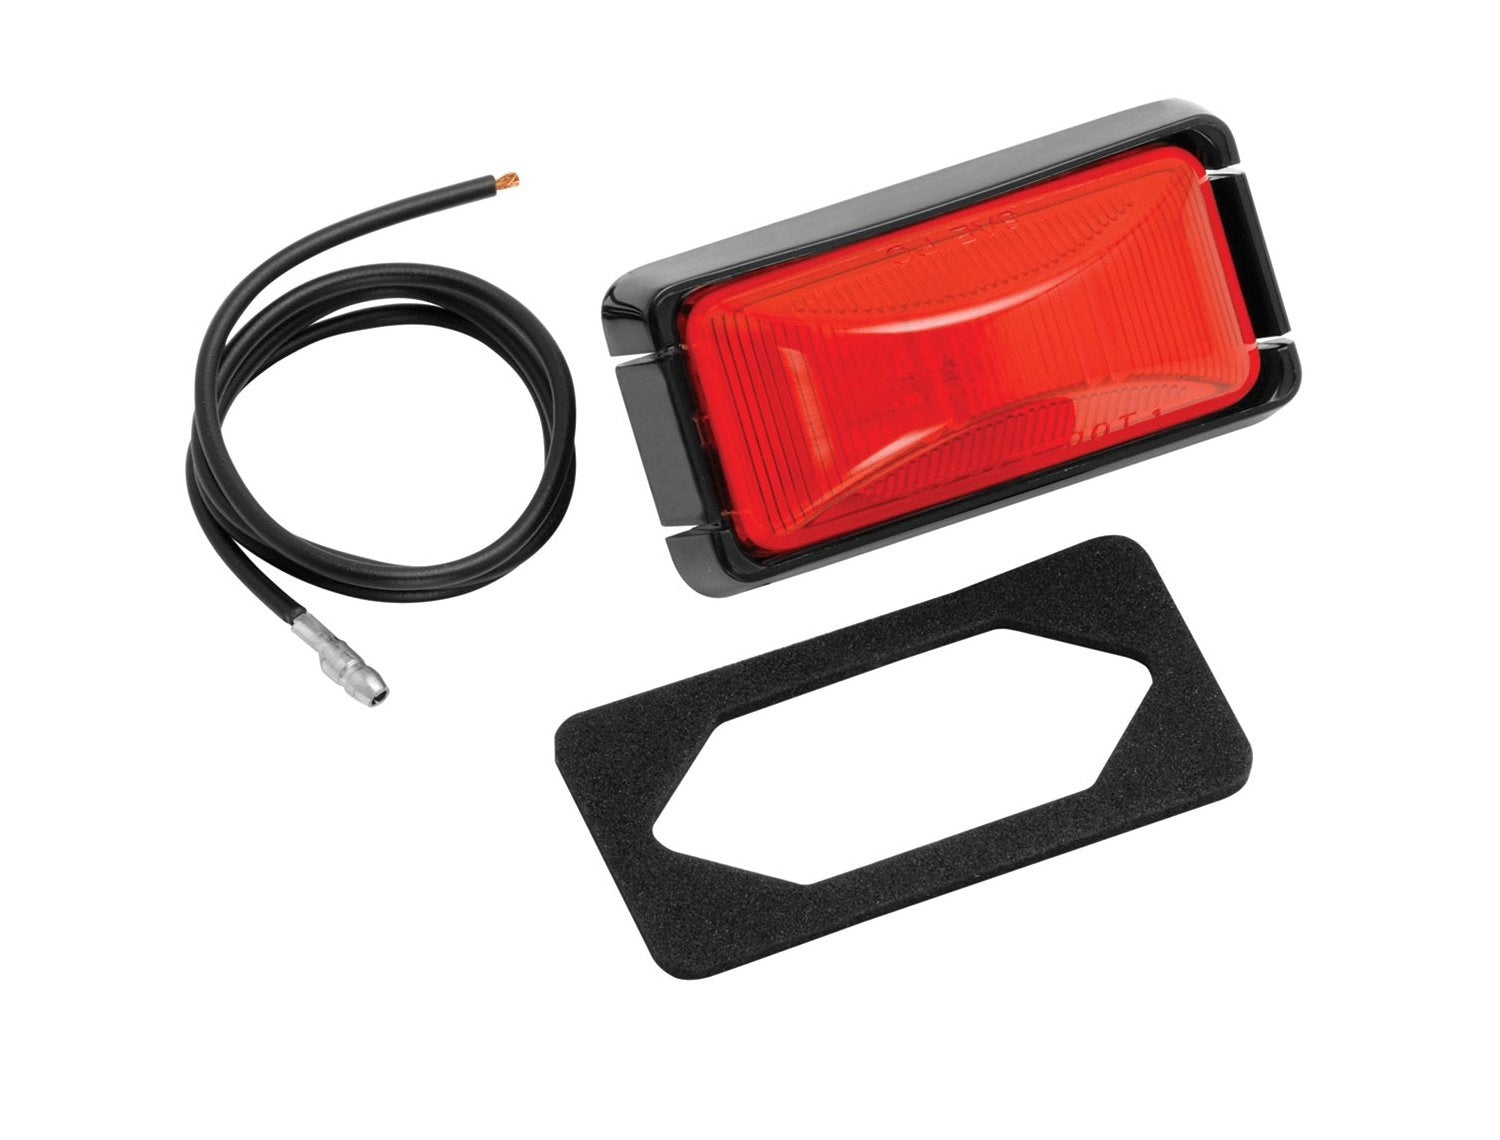 Bargman 41-37-031 Side Marker Light (Waterproof Rectangular with Black Base - Red)